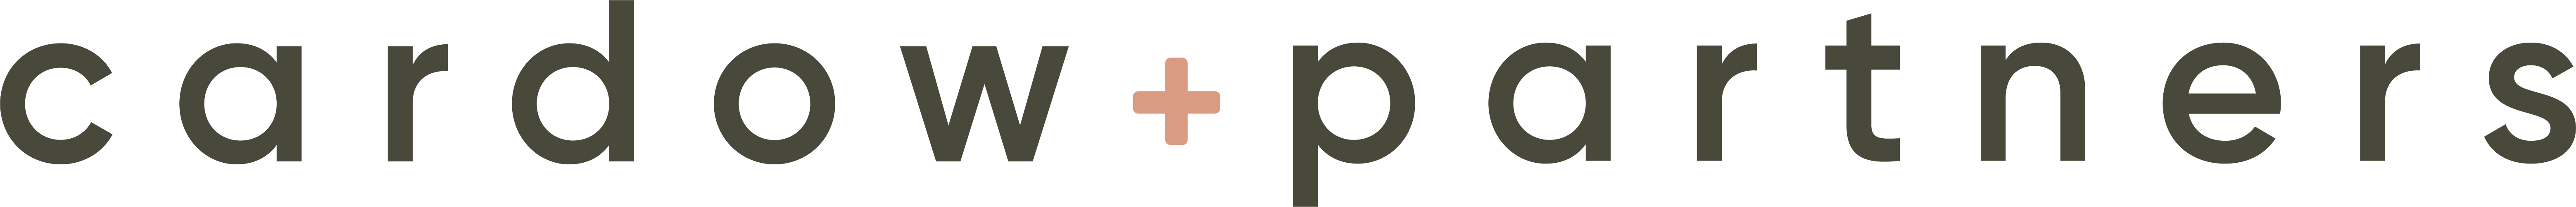 Cardow + Partners - Primary_OlivePink Logo